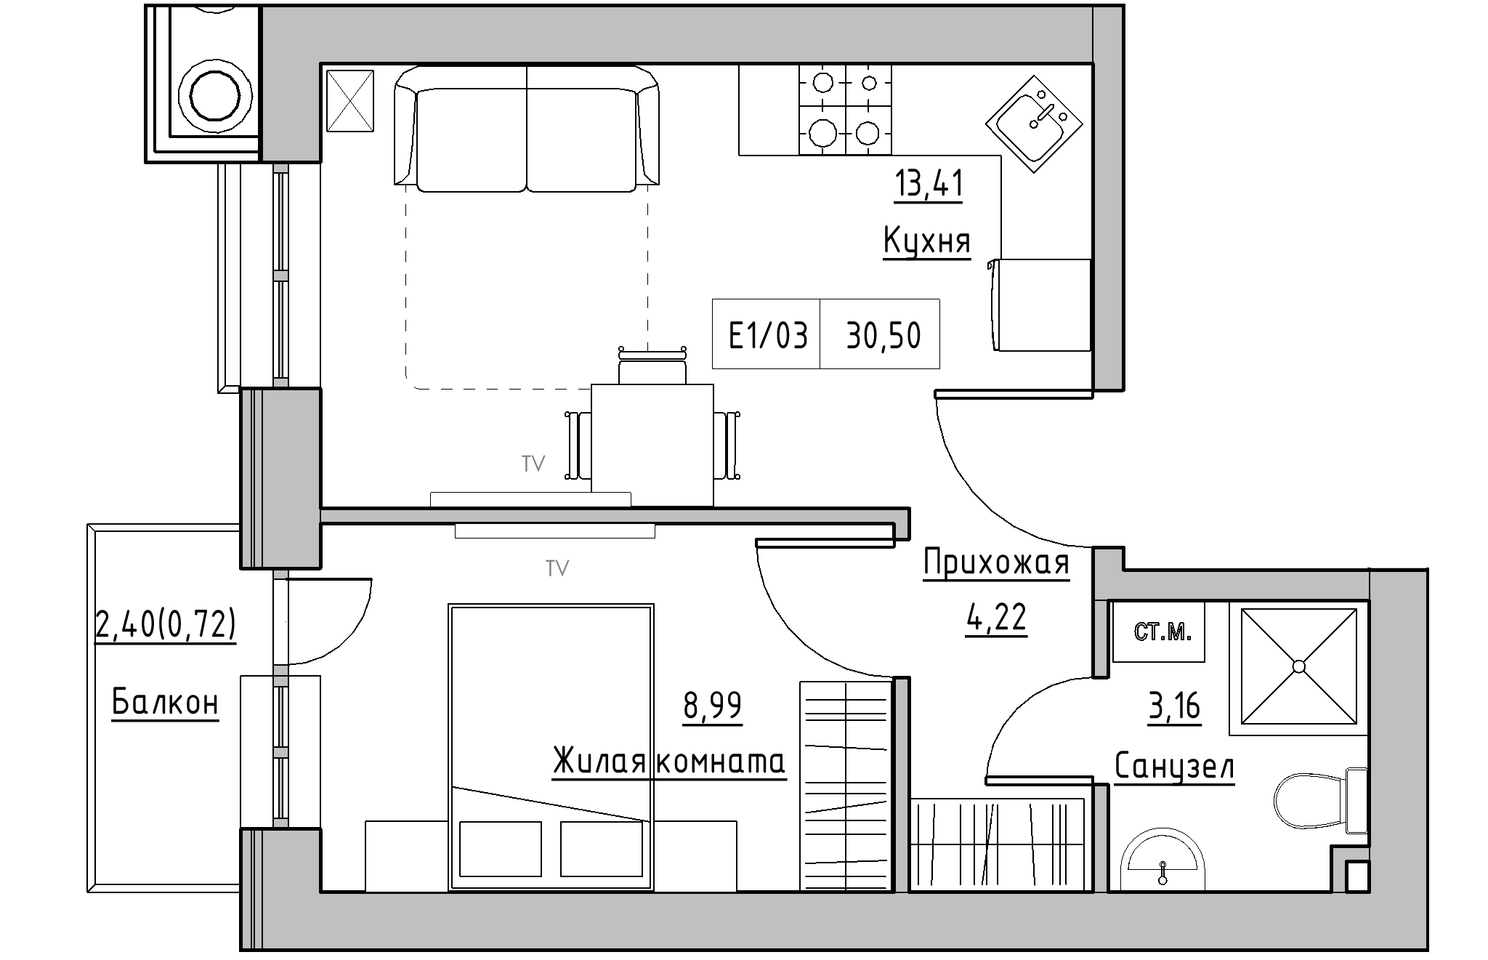 Planning 1-rm flats area 30.5m2, KS-010-02/0012.